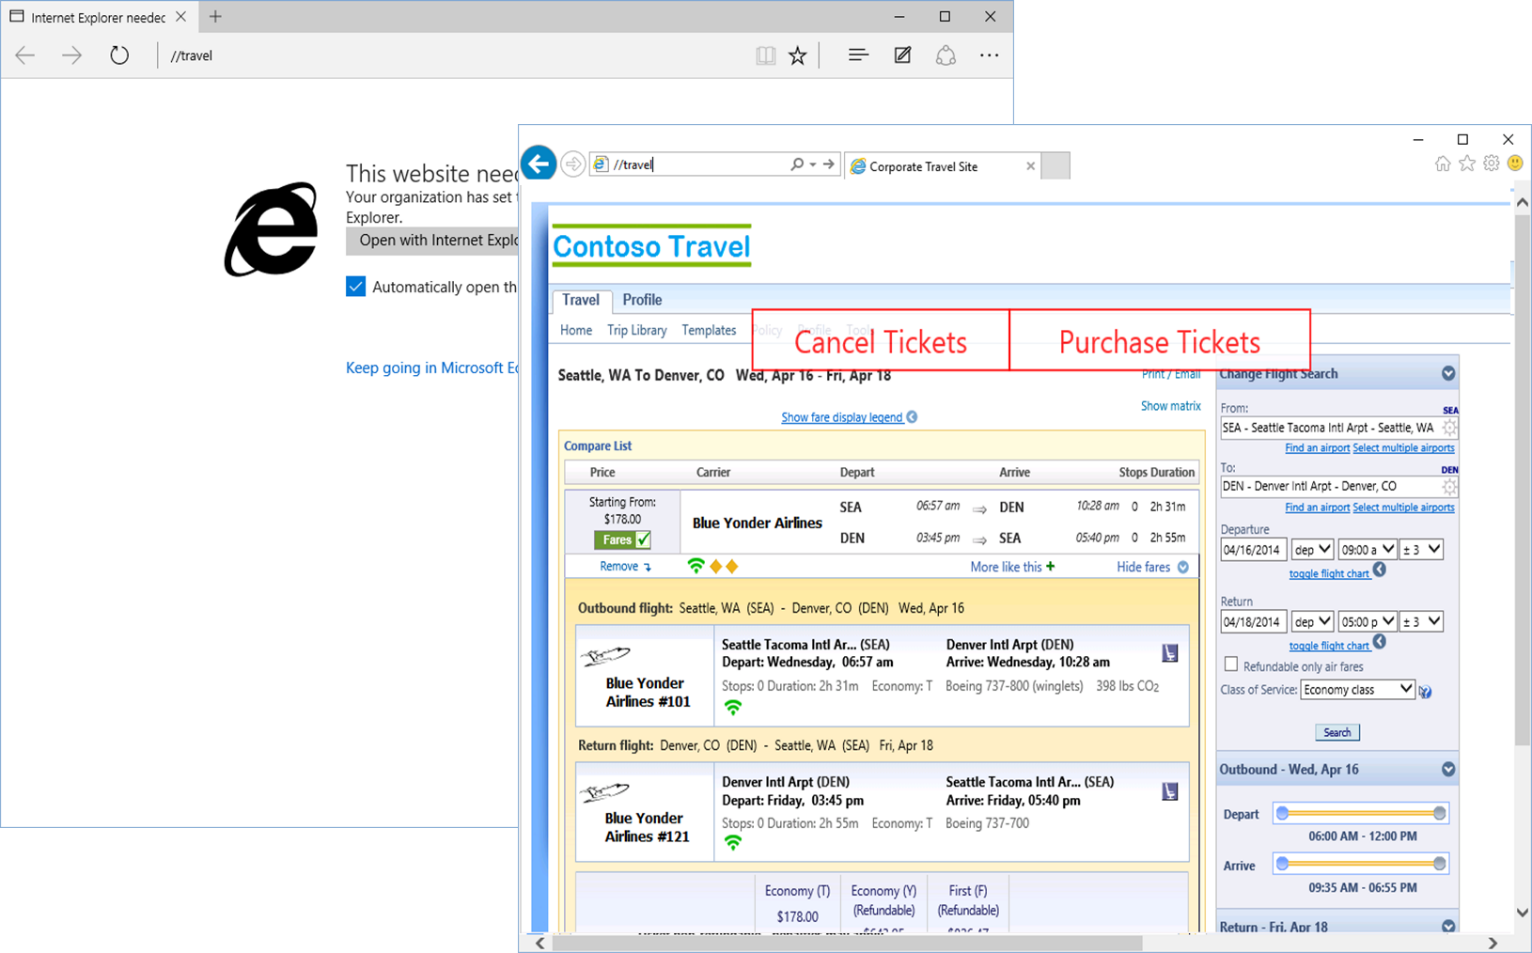 Screen capture showing Microsoft Edge handing navigation to Internet Explorer 11